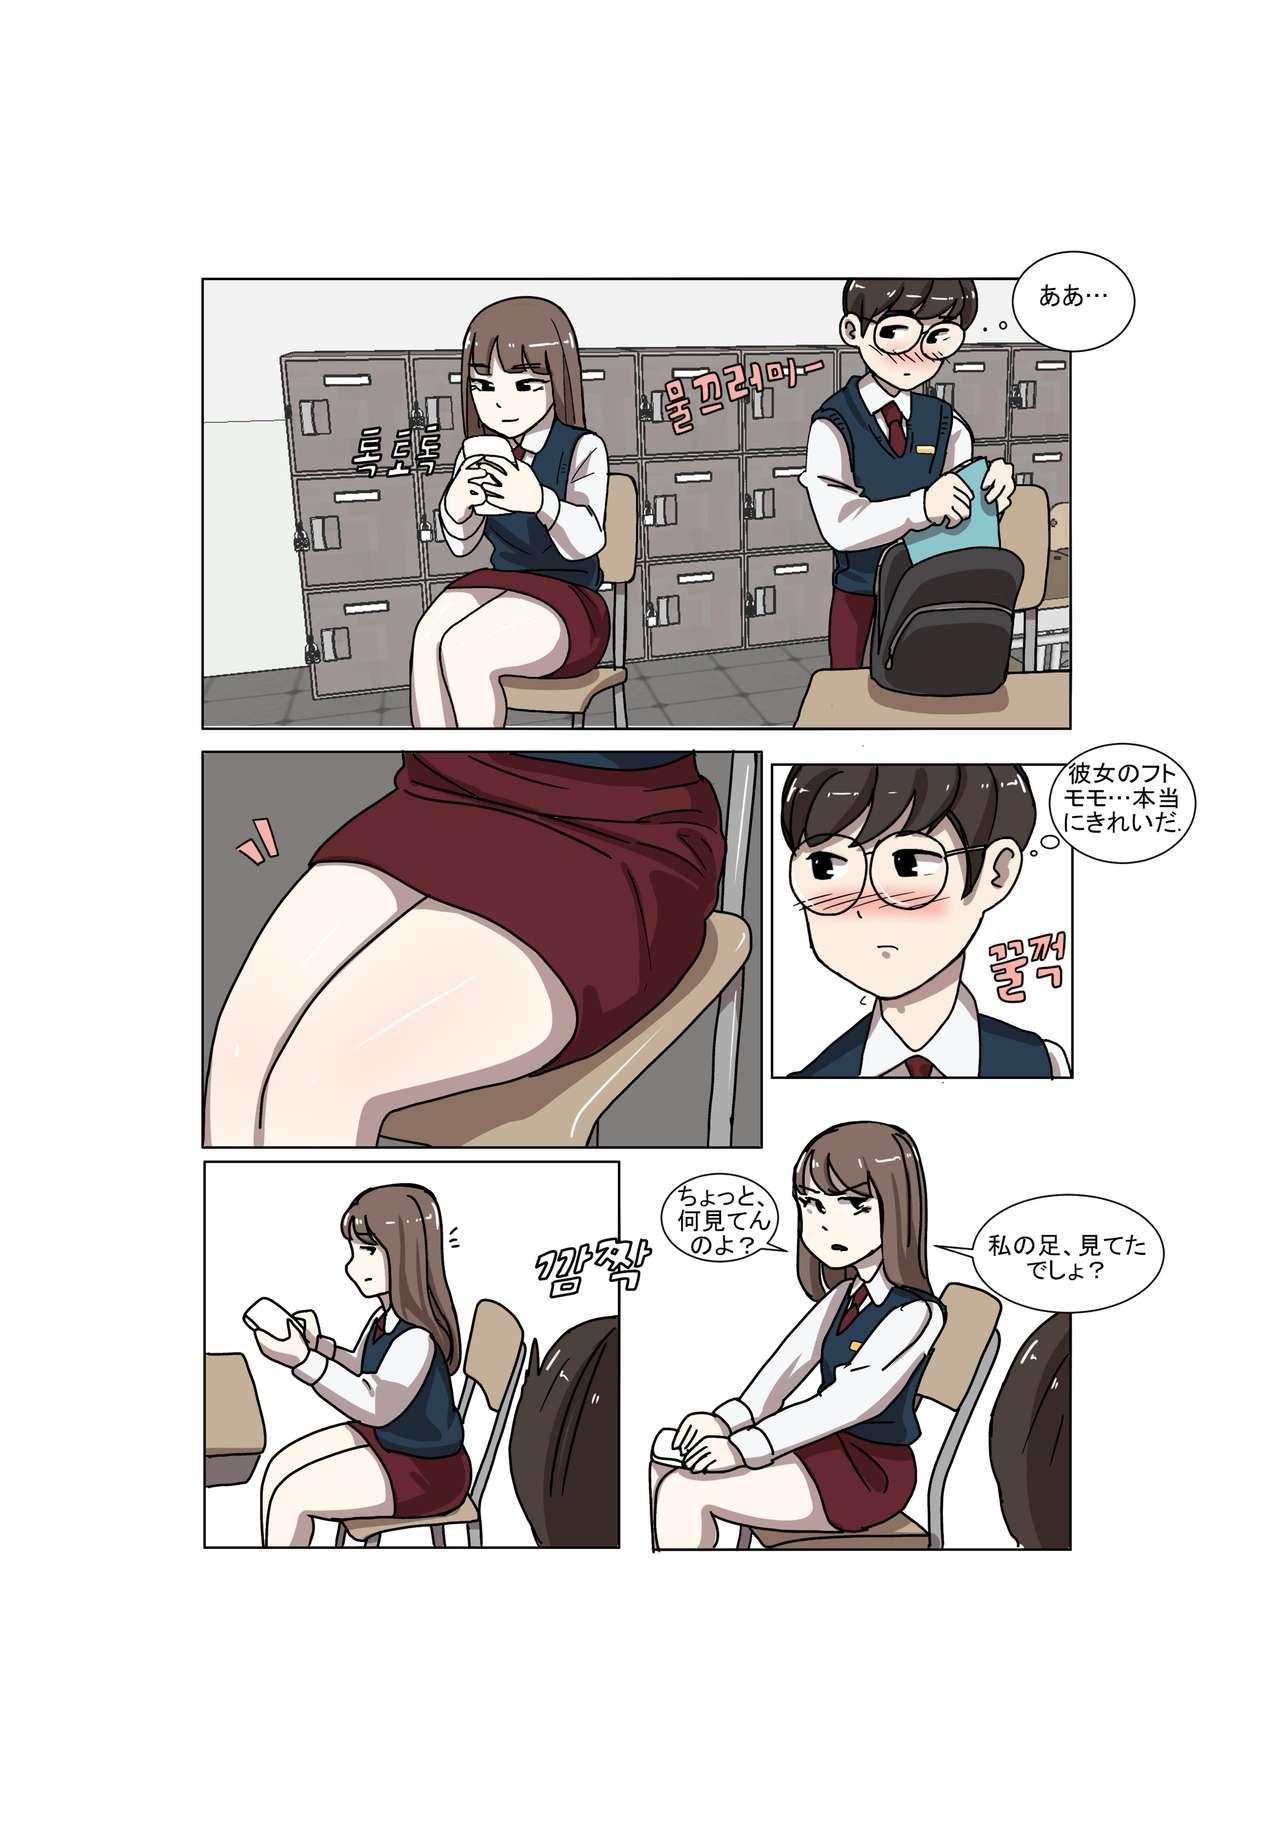 Yaoi Spanking Anime